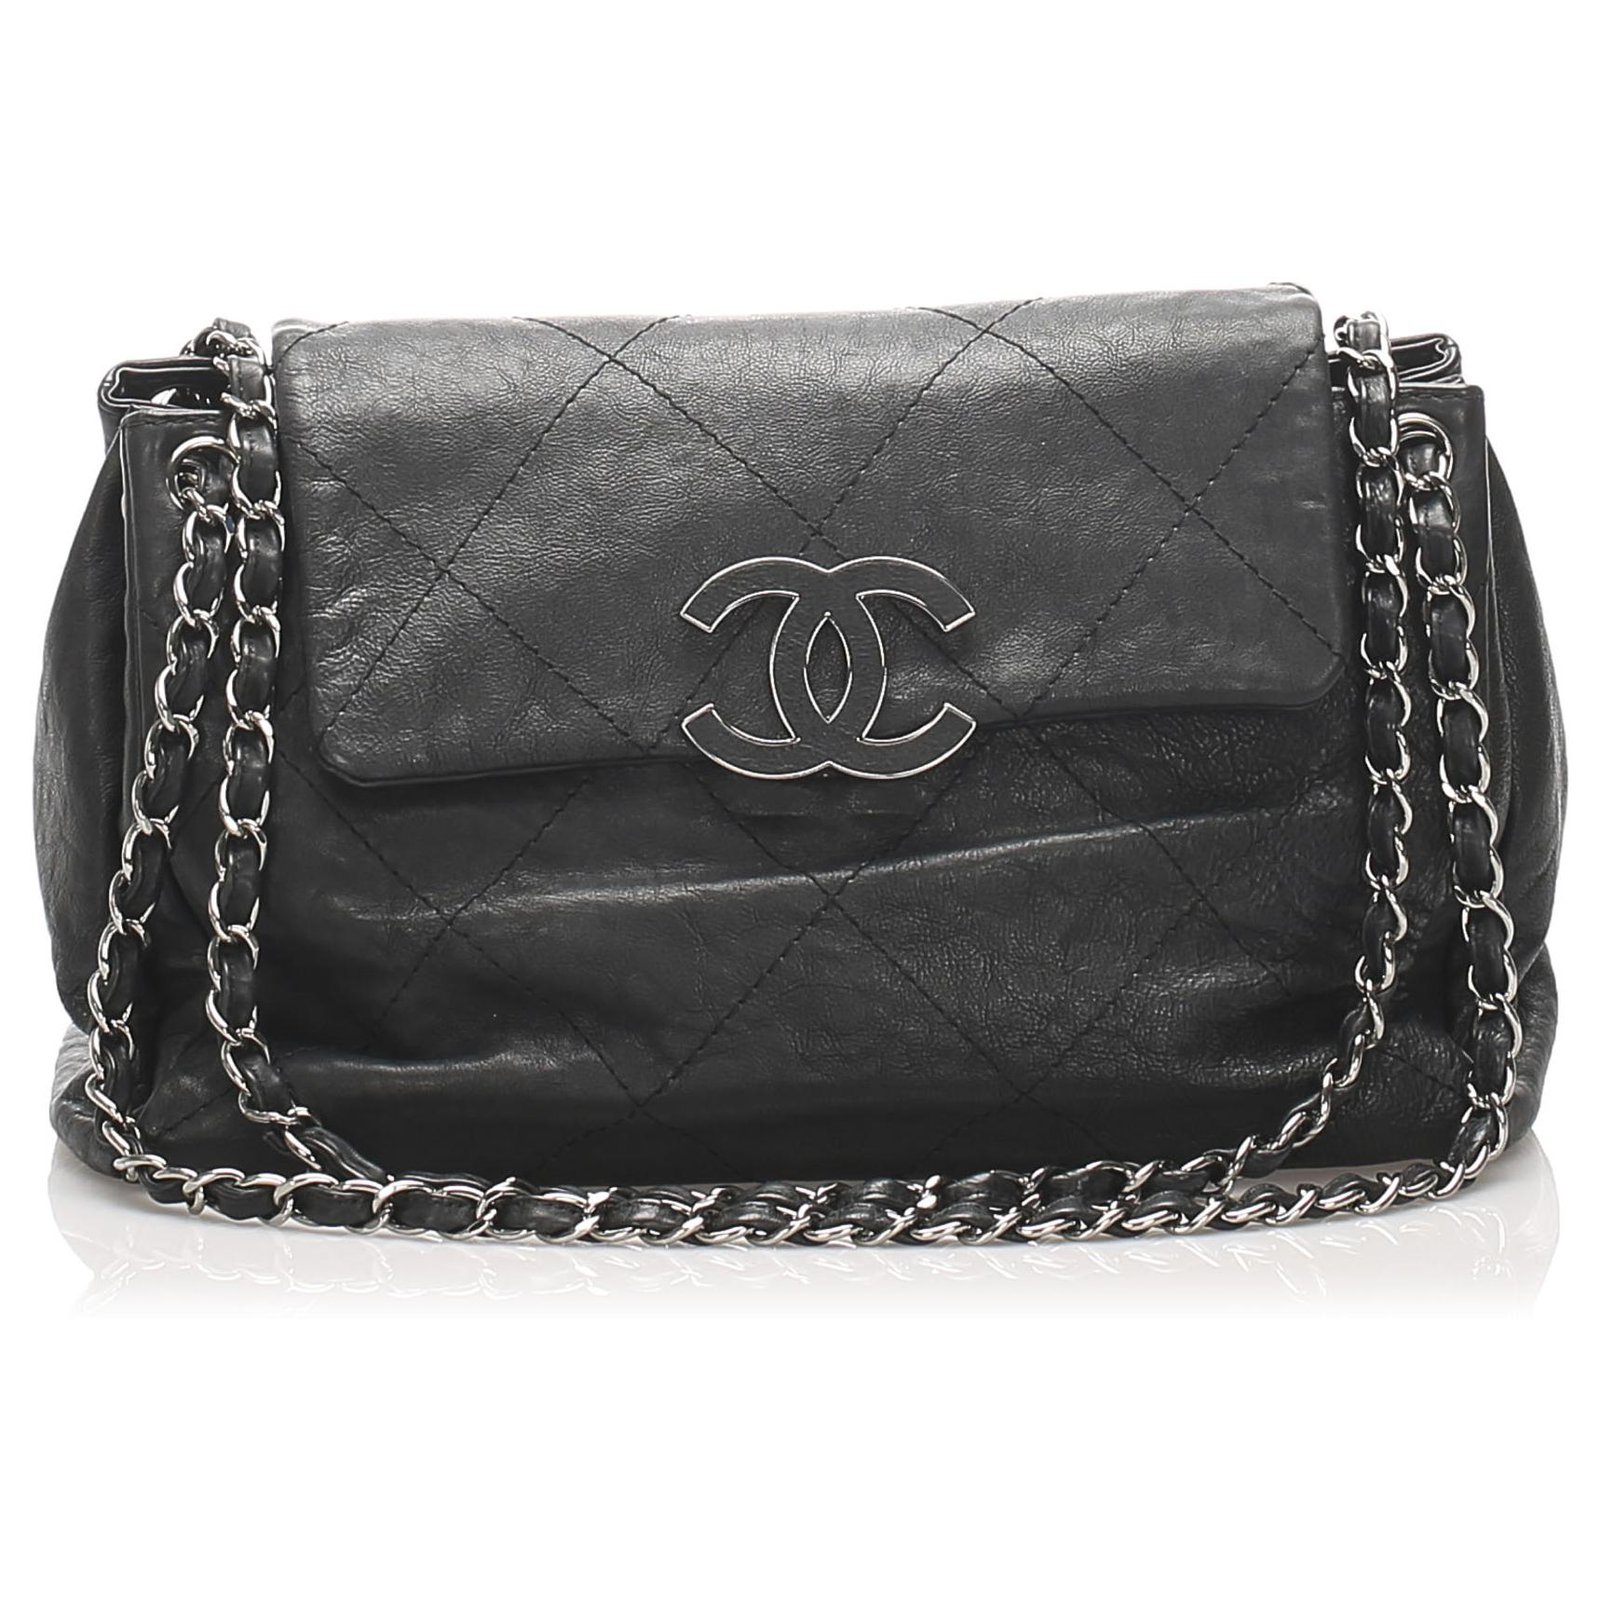 Chanel Black Wild Stitch Hamptons Accordion Flap Bag